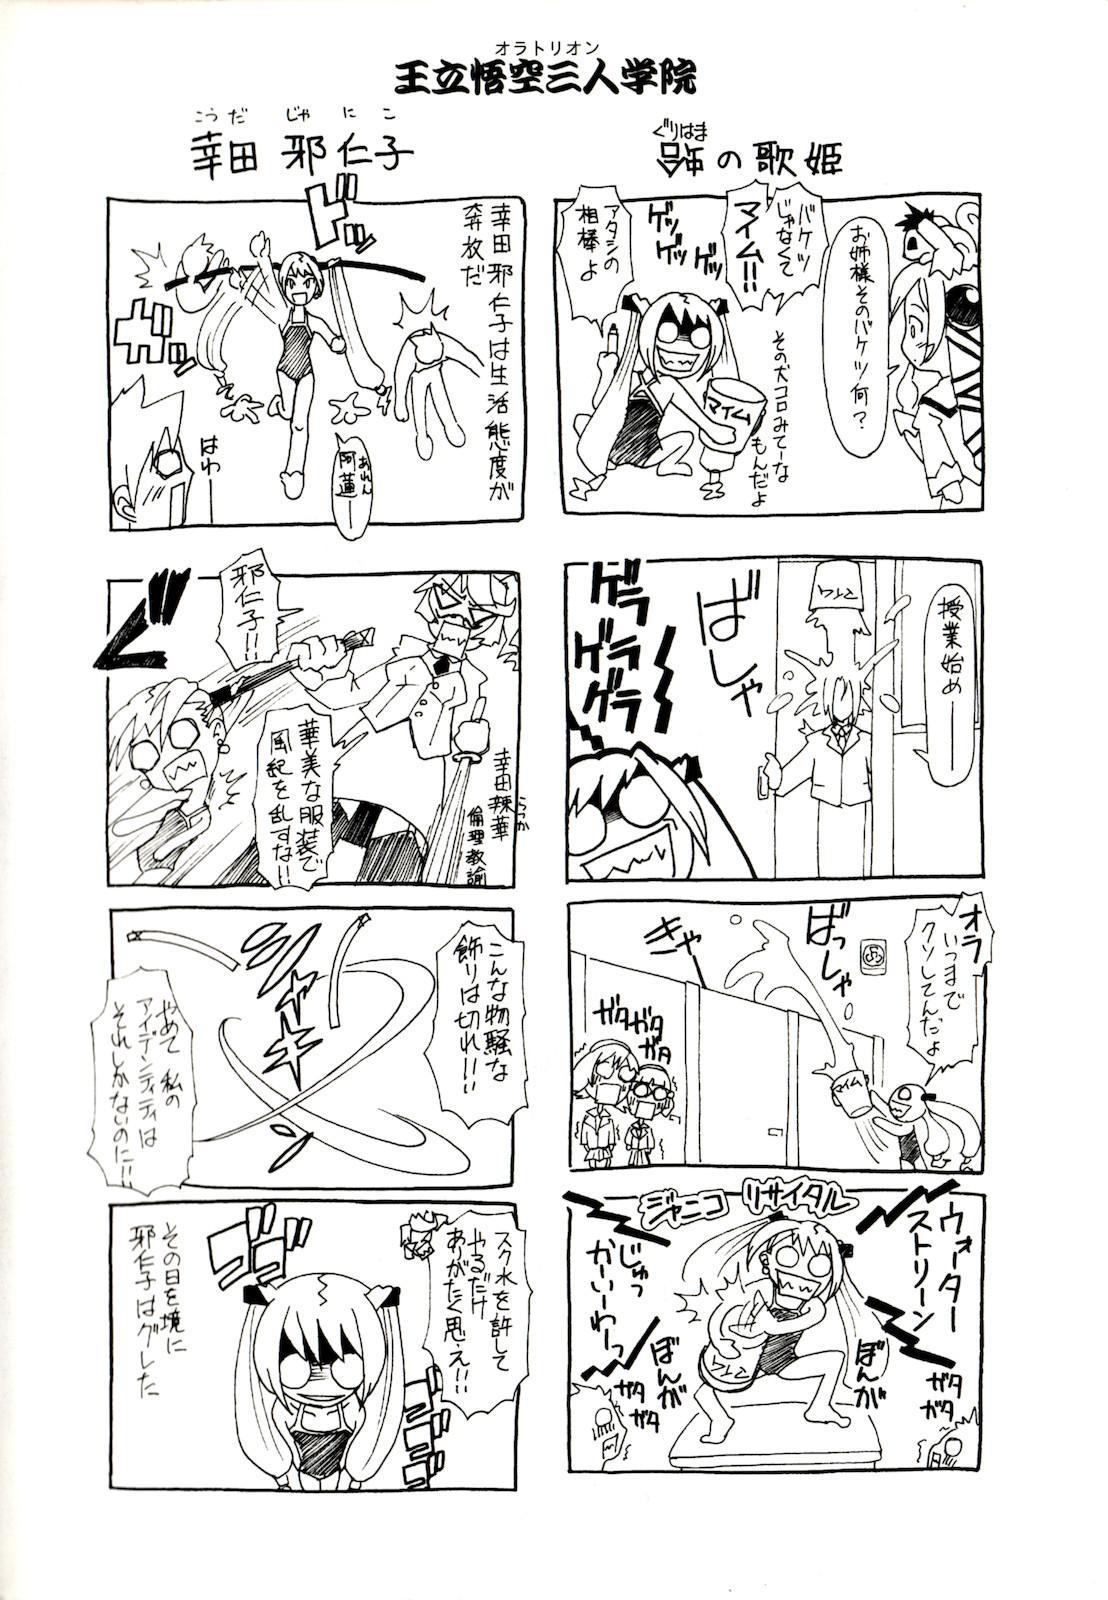 Price [Kanoe] Kuro no utahime -Yami no enishi- 1 Double - Page 4